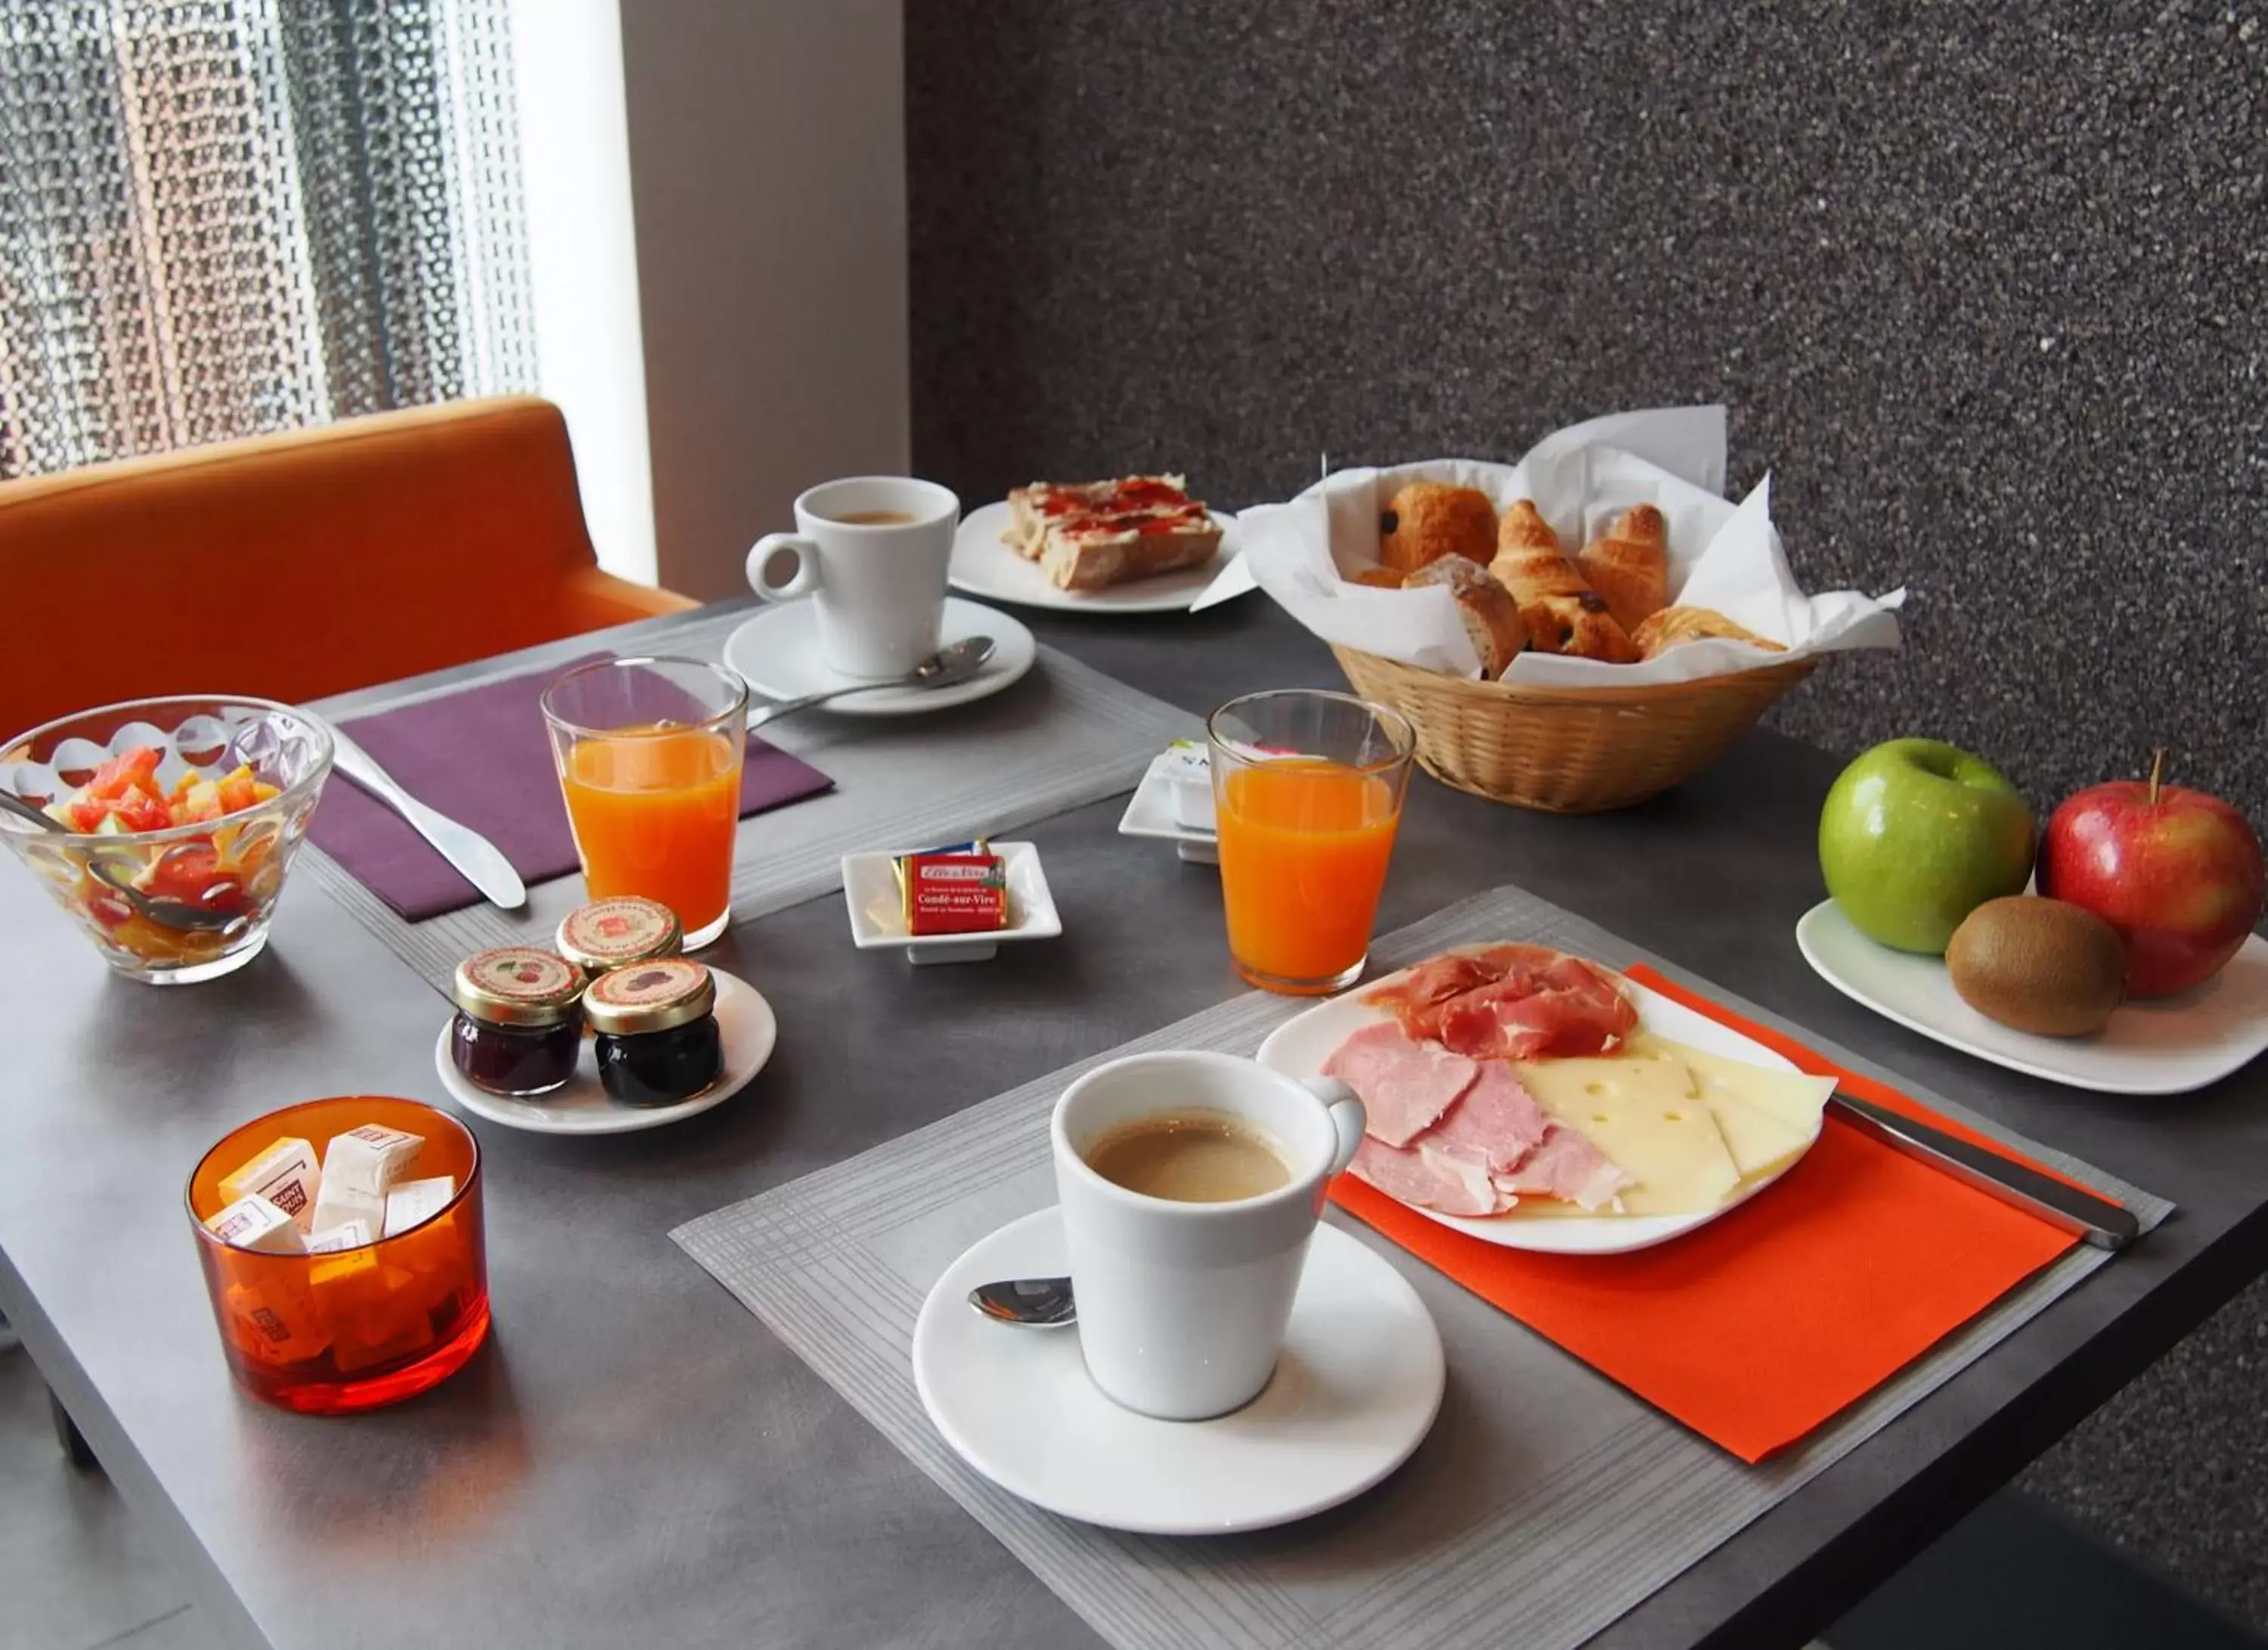 Buffet breakfast in Porte de Versailles Hotel